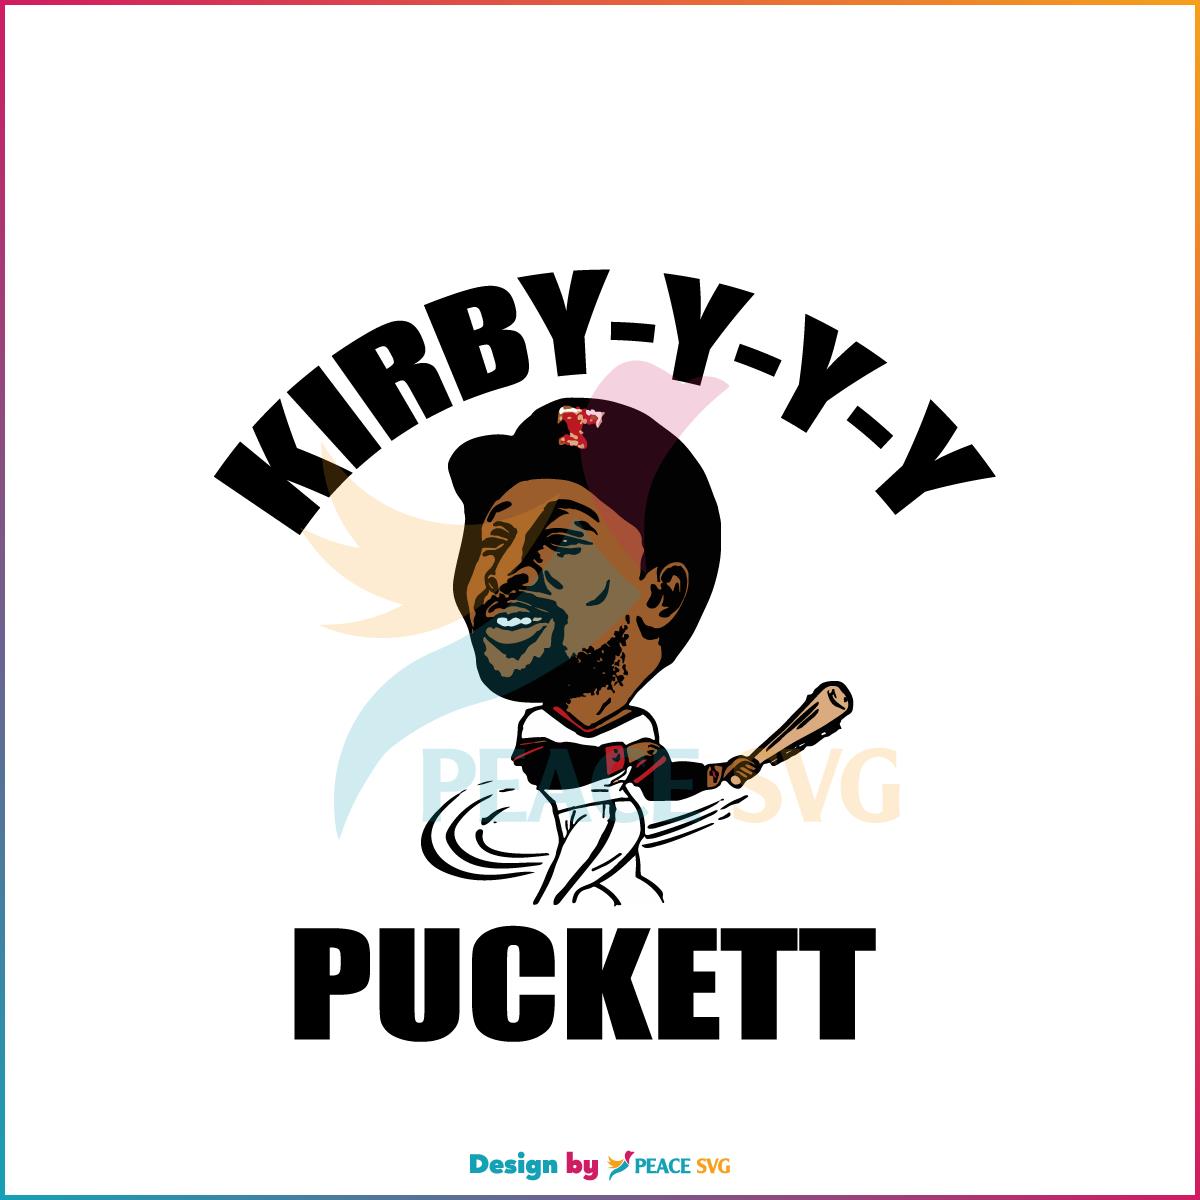 Toledo Mud Hens Kirby Puckett Best SVG, Cutting Digital Files